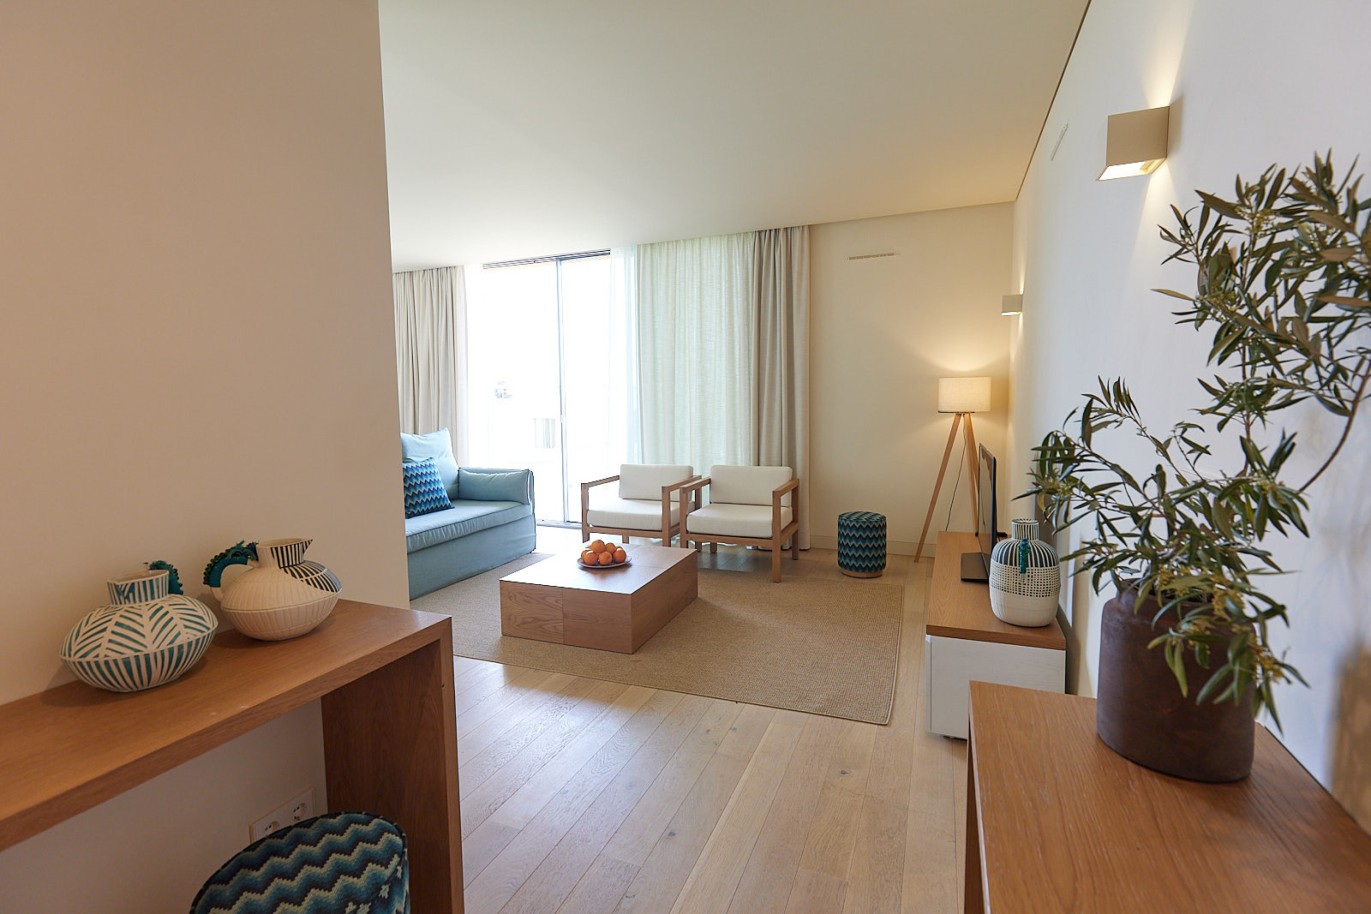 2 bedroom apartment in resort, for sale in Porches, Algarve_229097